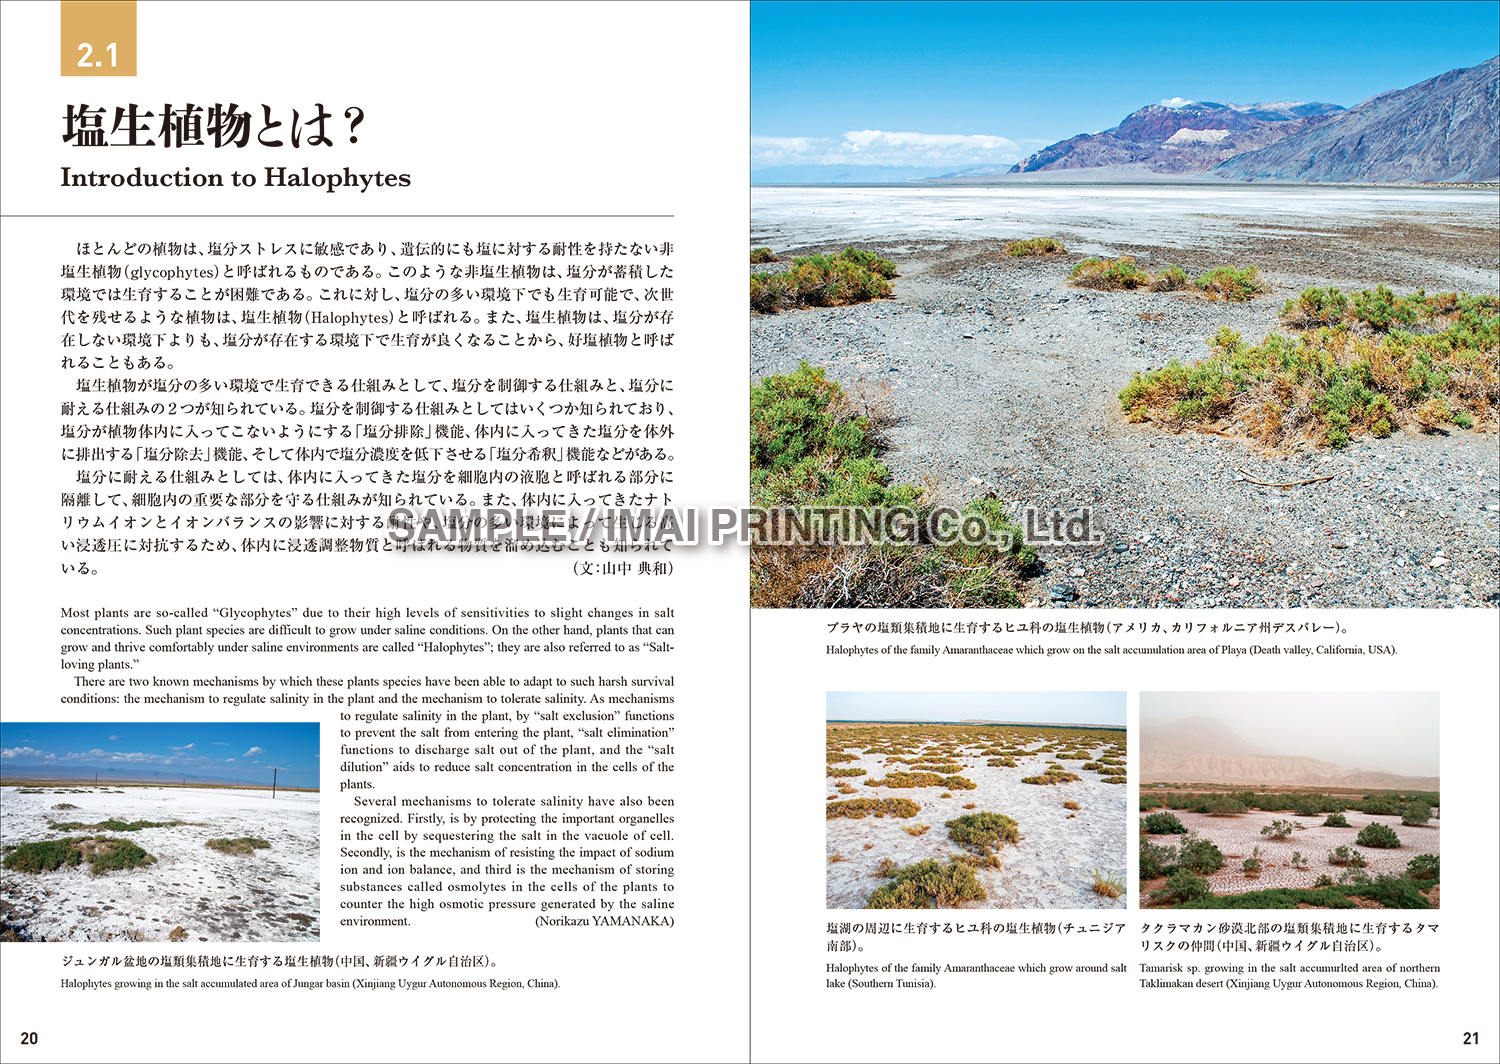 Imai Printing News 乾燥地フォトブックシリーズvol 4 乾燥地の塩類集積 3 31発売